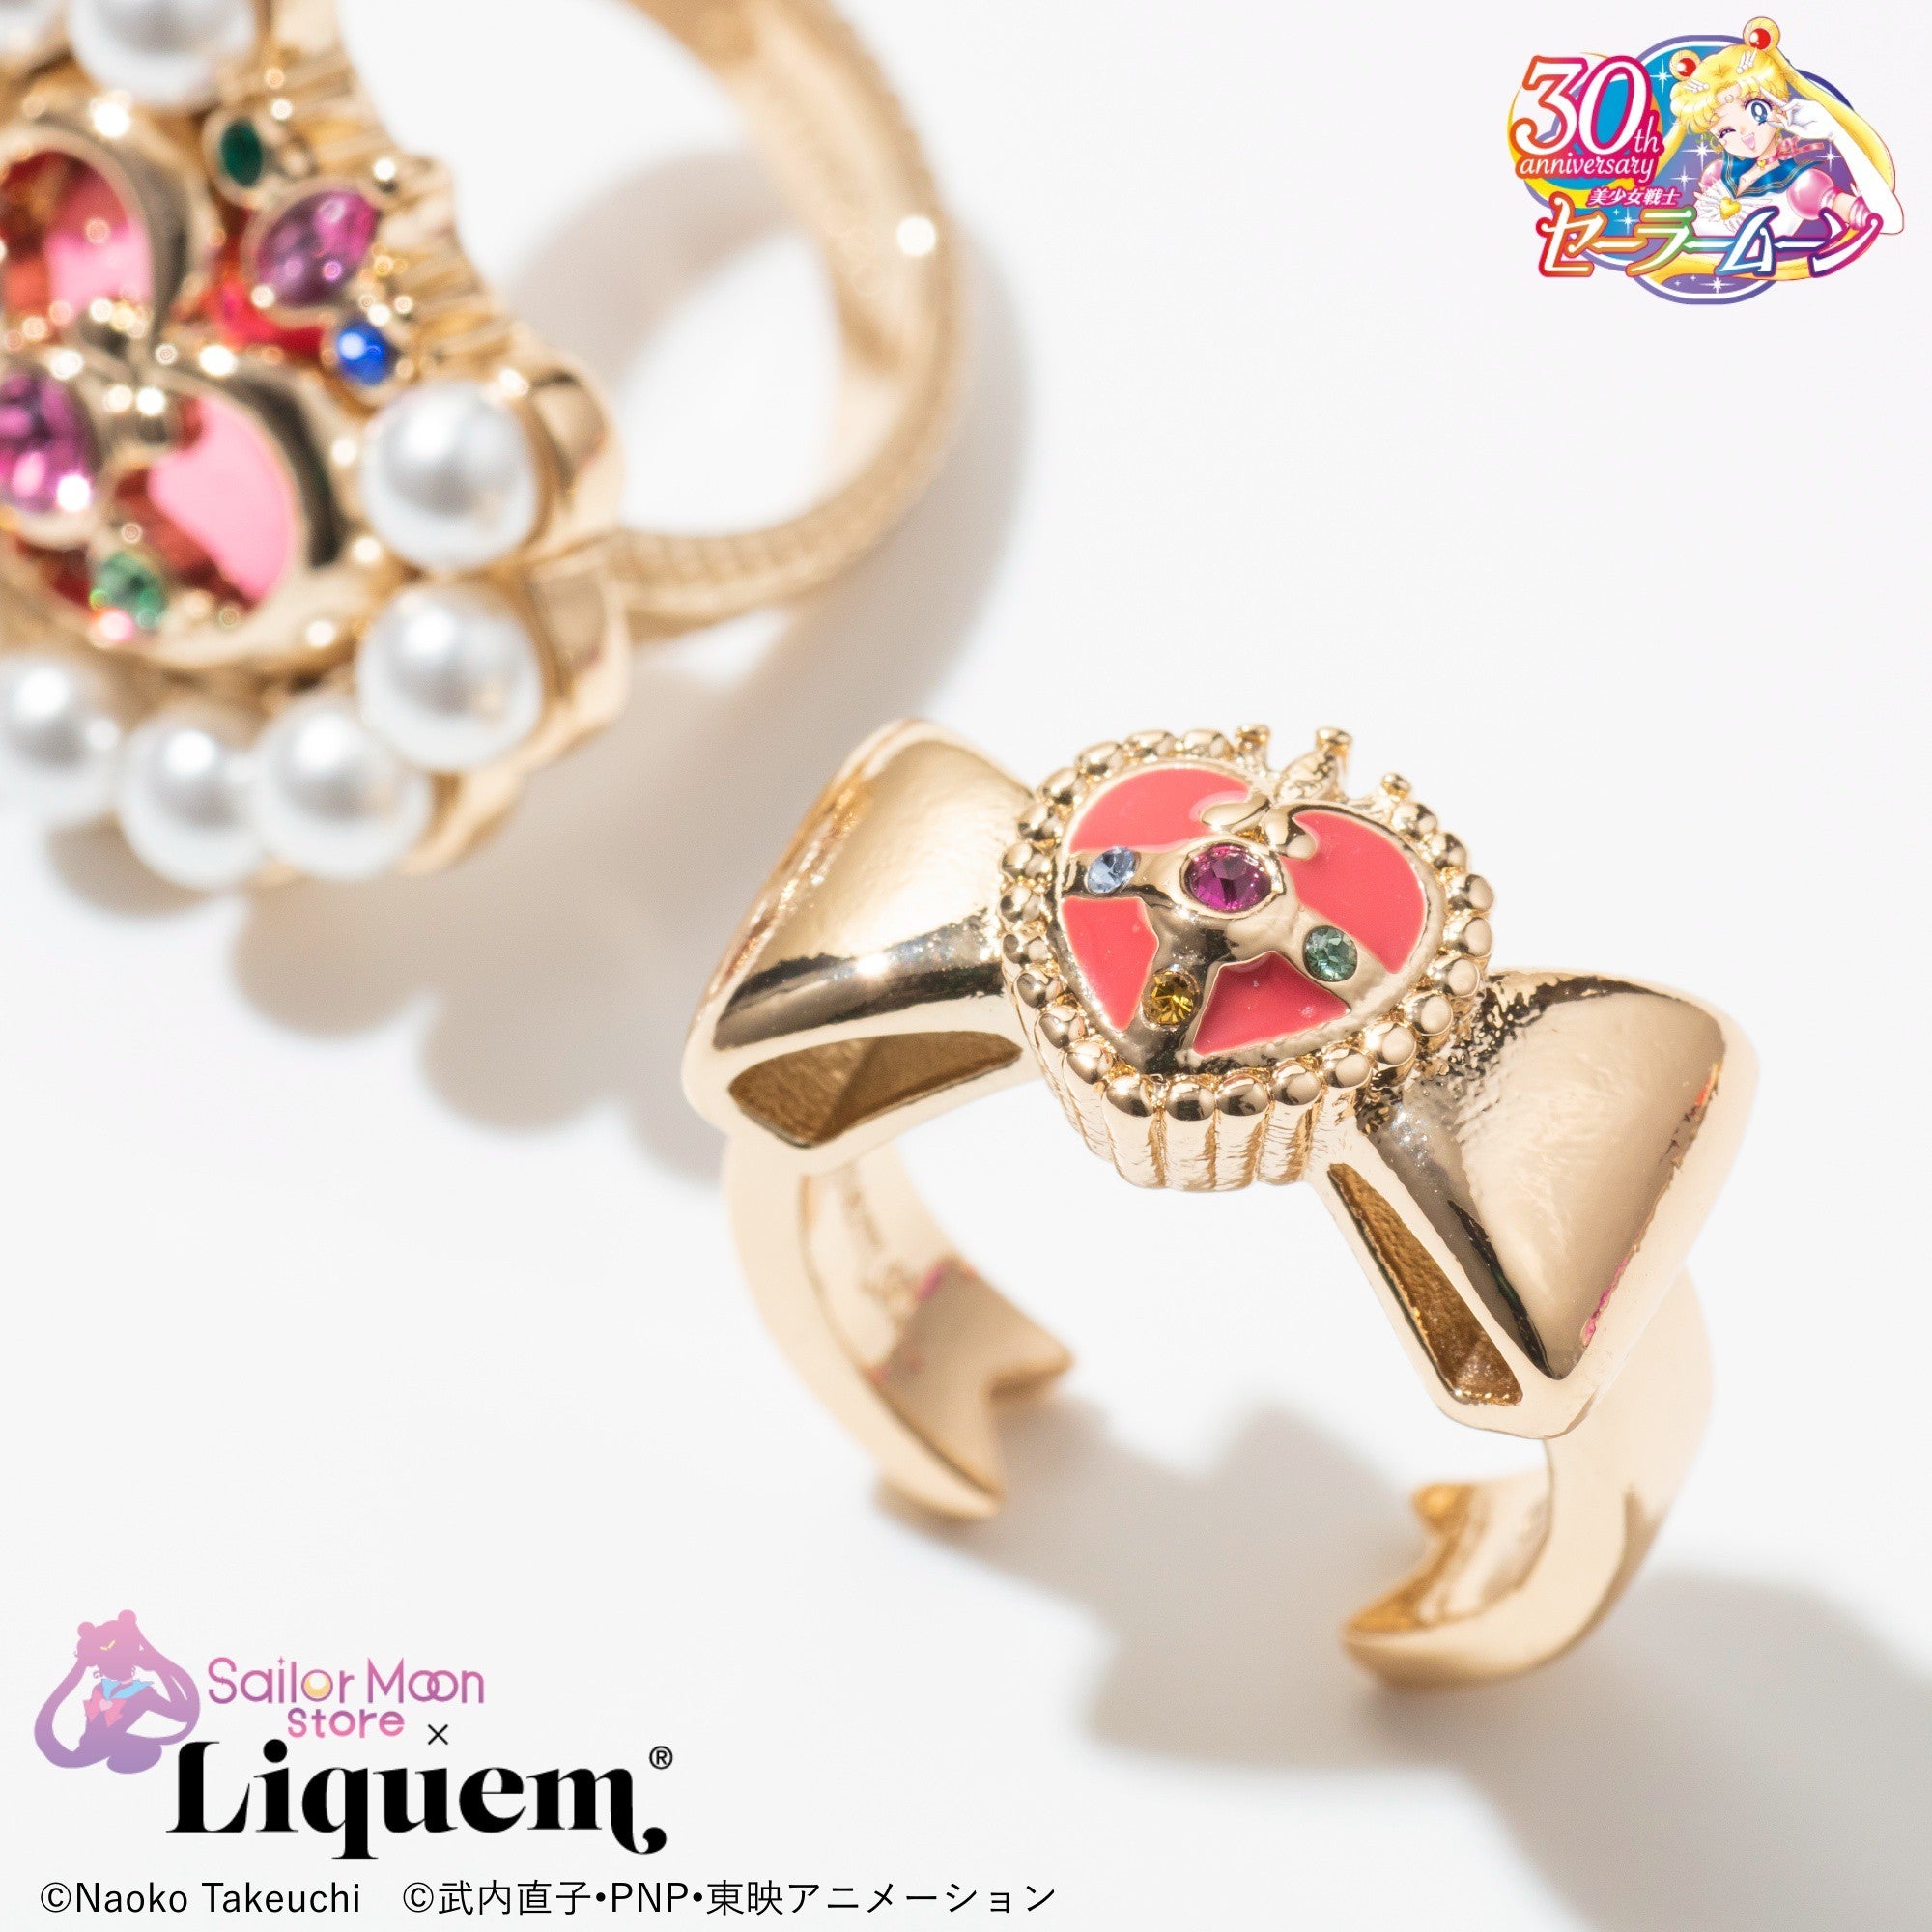 Sailor Moon store x Liquem / コズミックハートコンパクトリボンリング